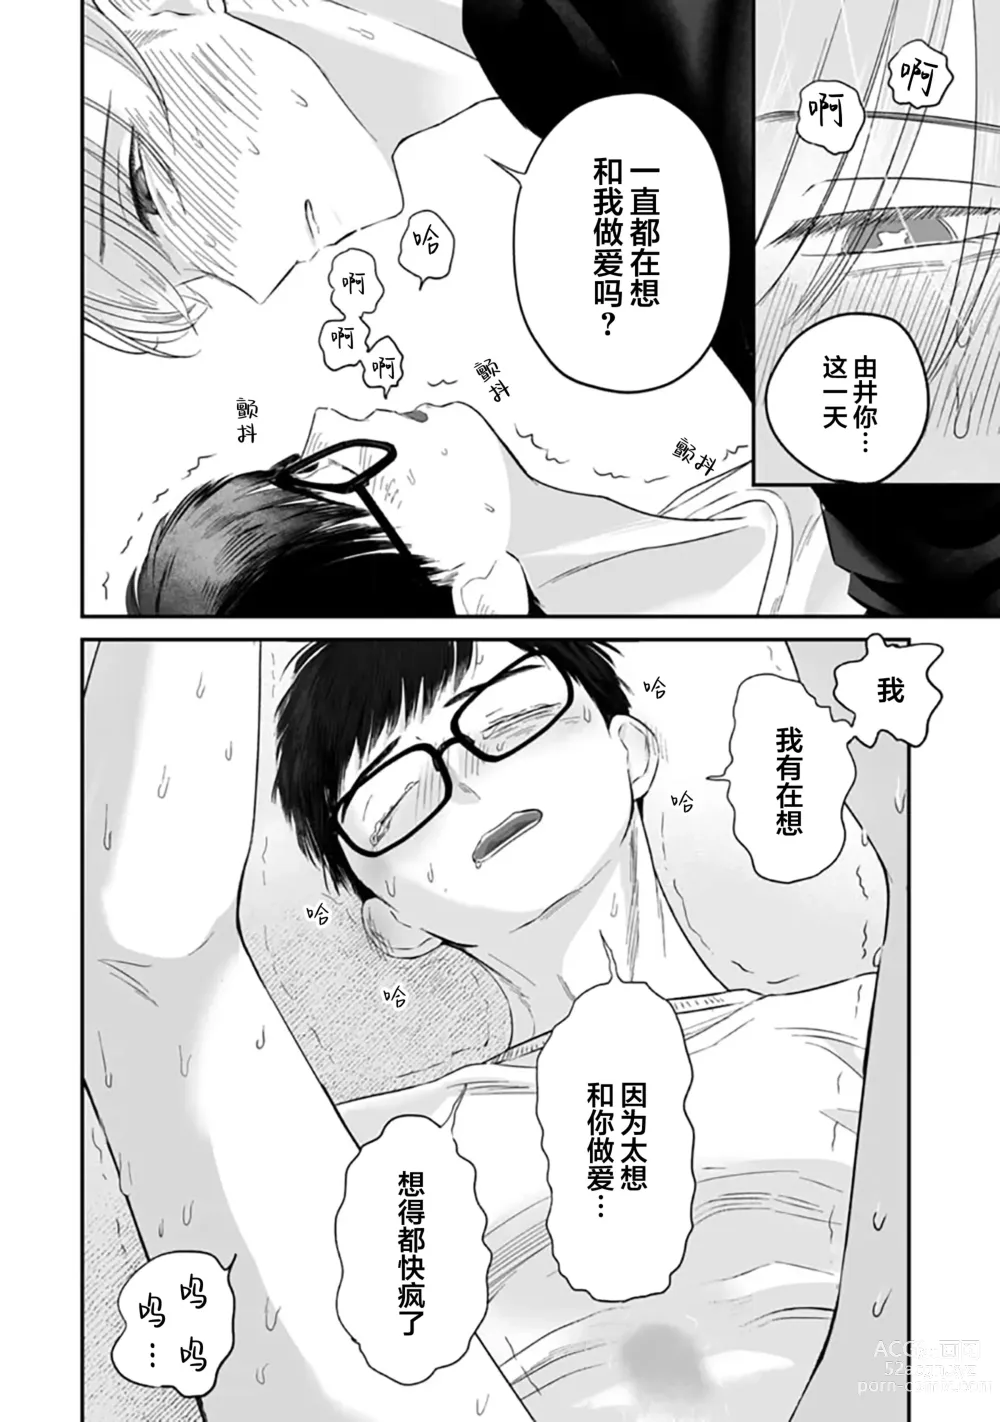 Page 299 of manga 渴望褪下制服